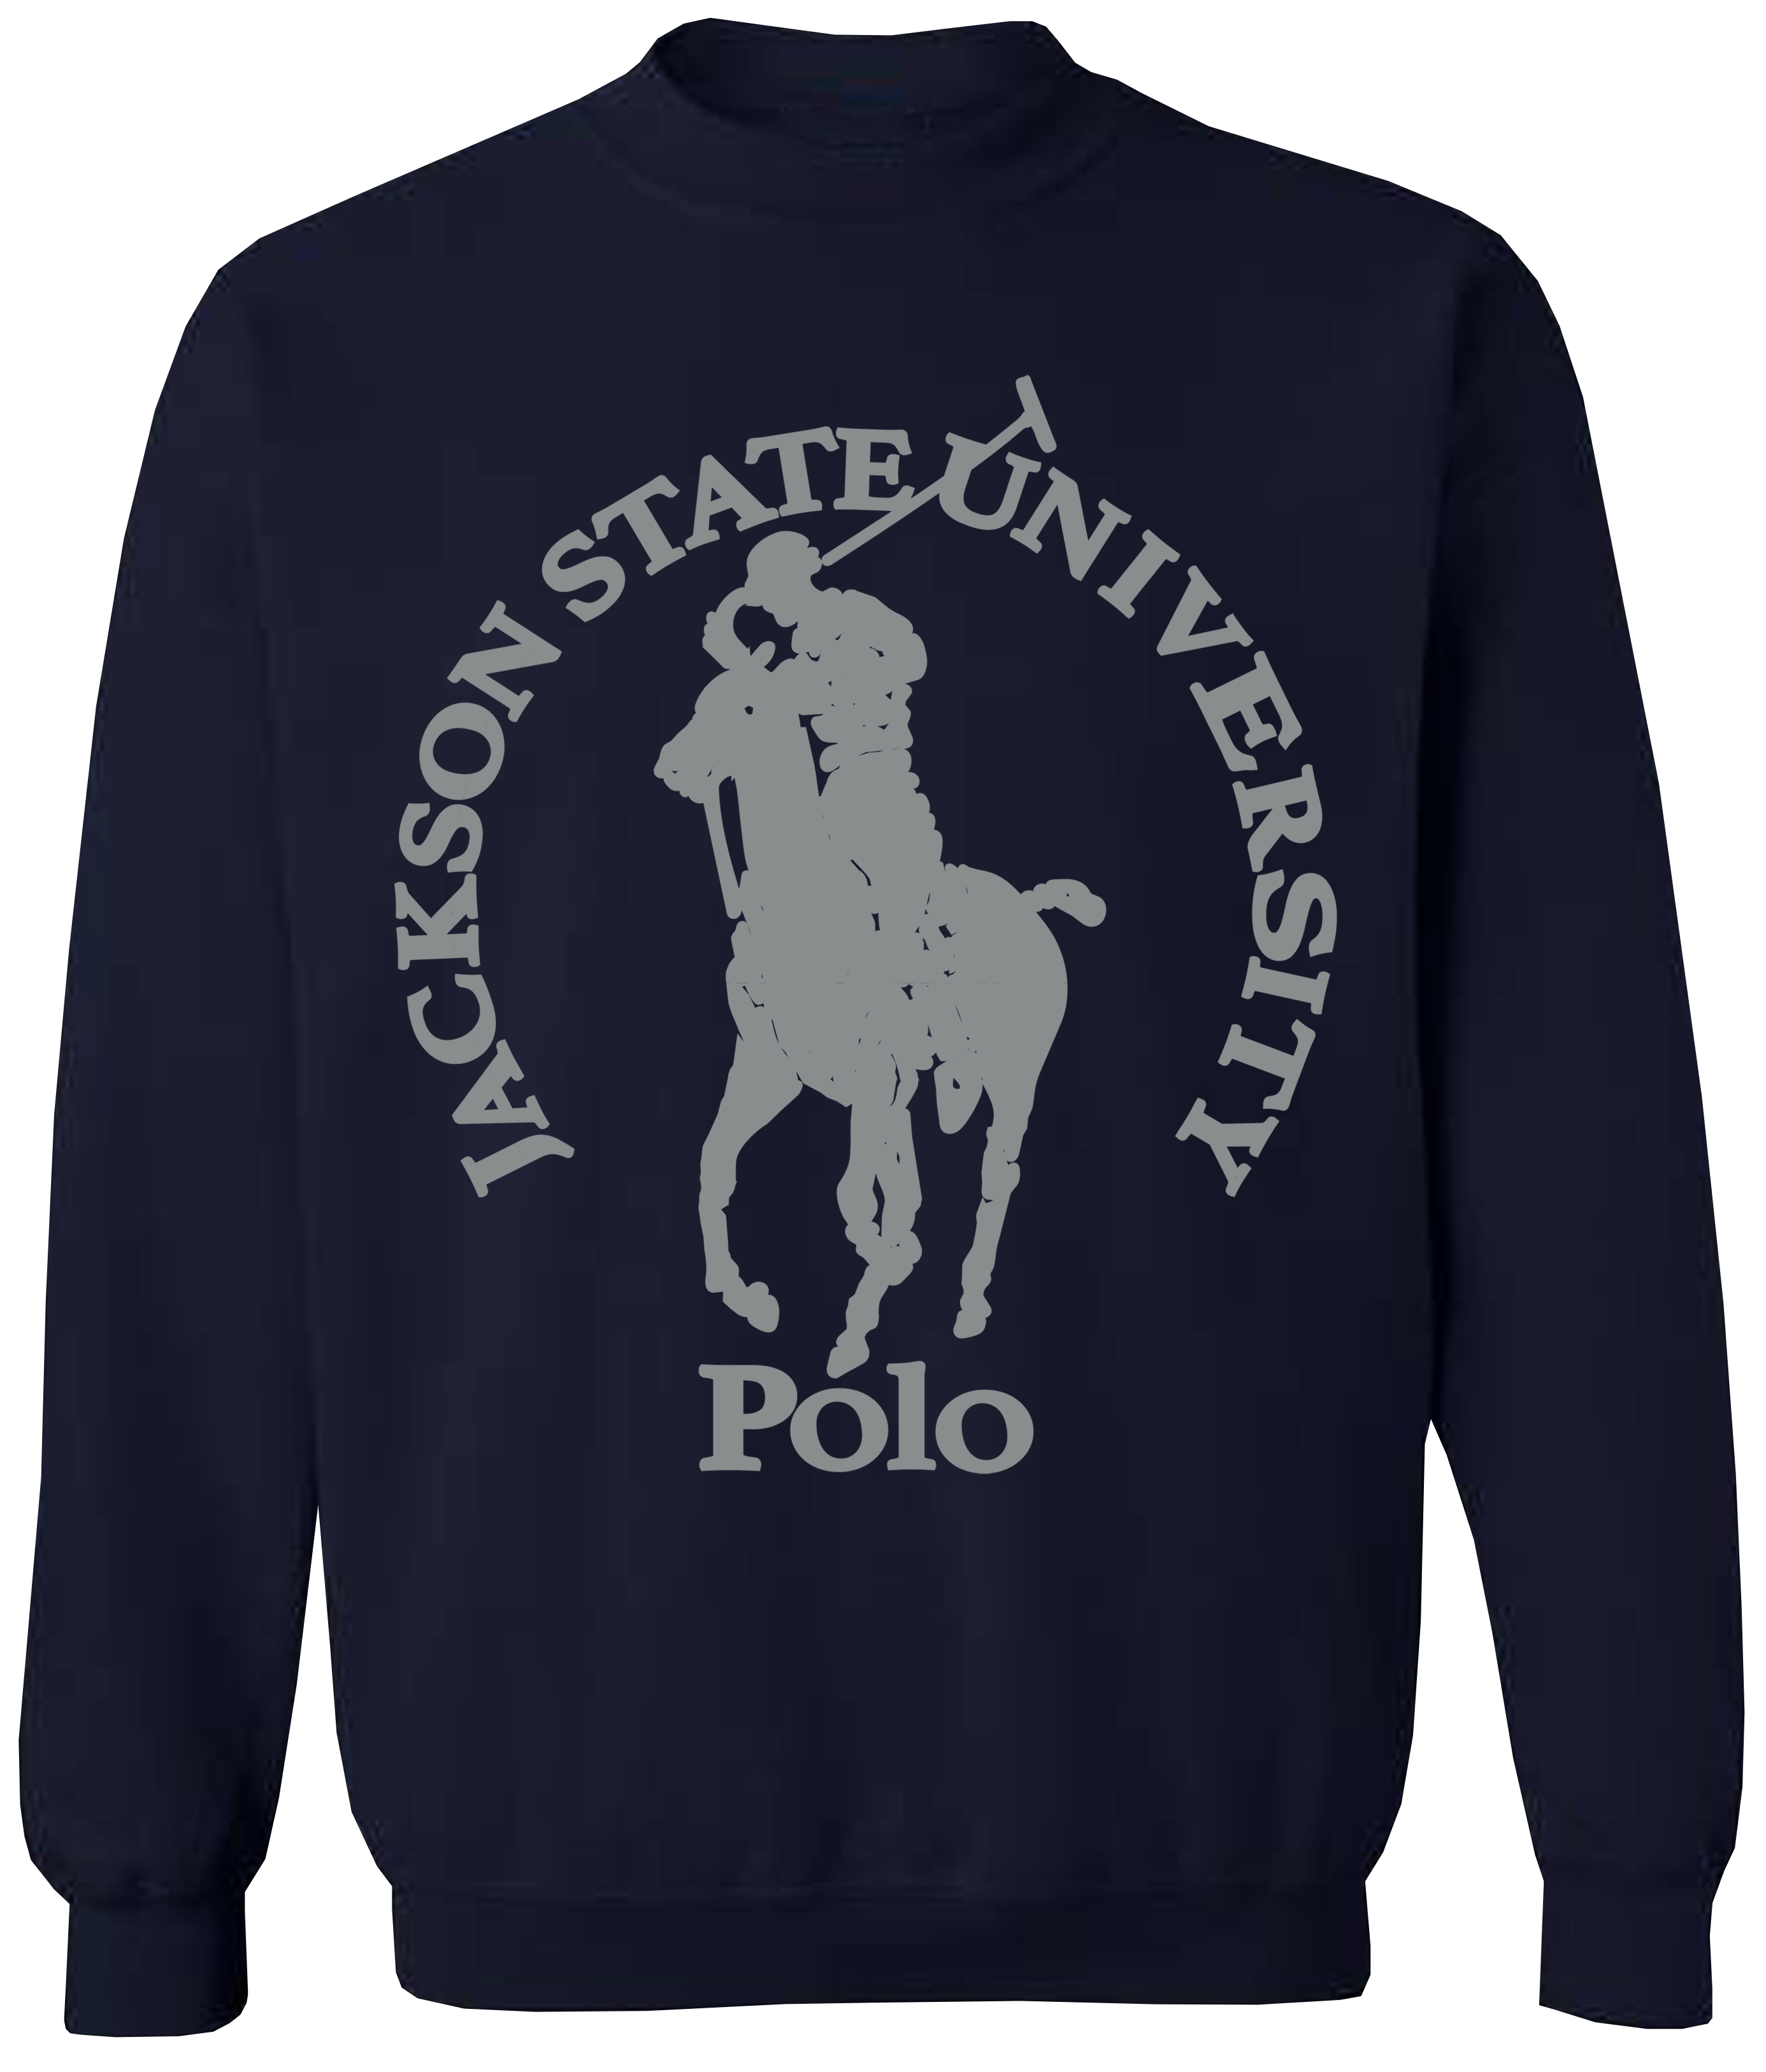 HBCU Polo Crewneck Sweatshirt - Jackson State